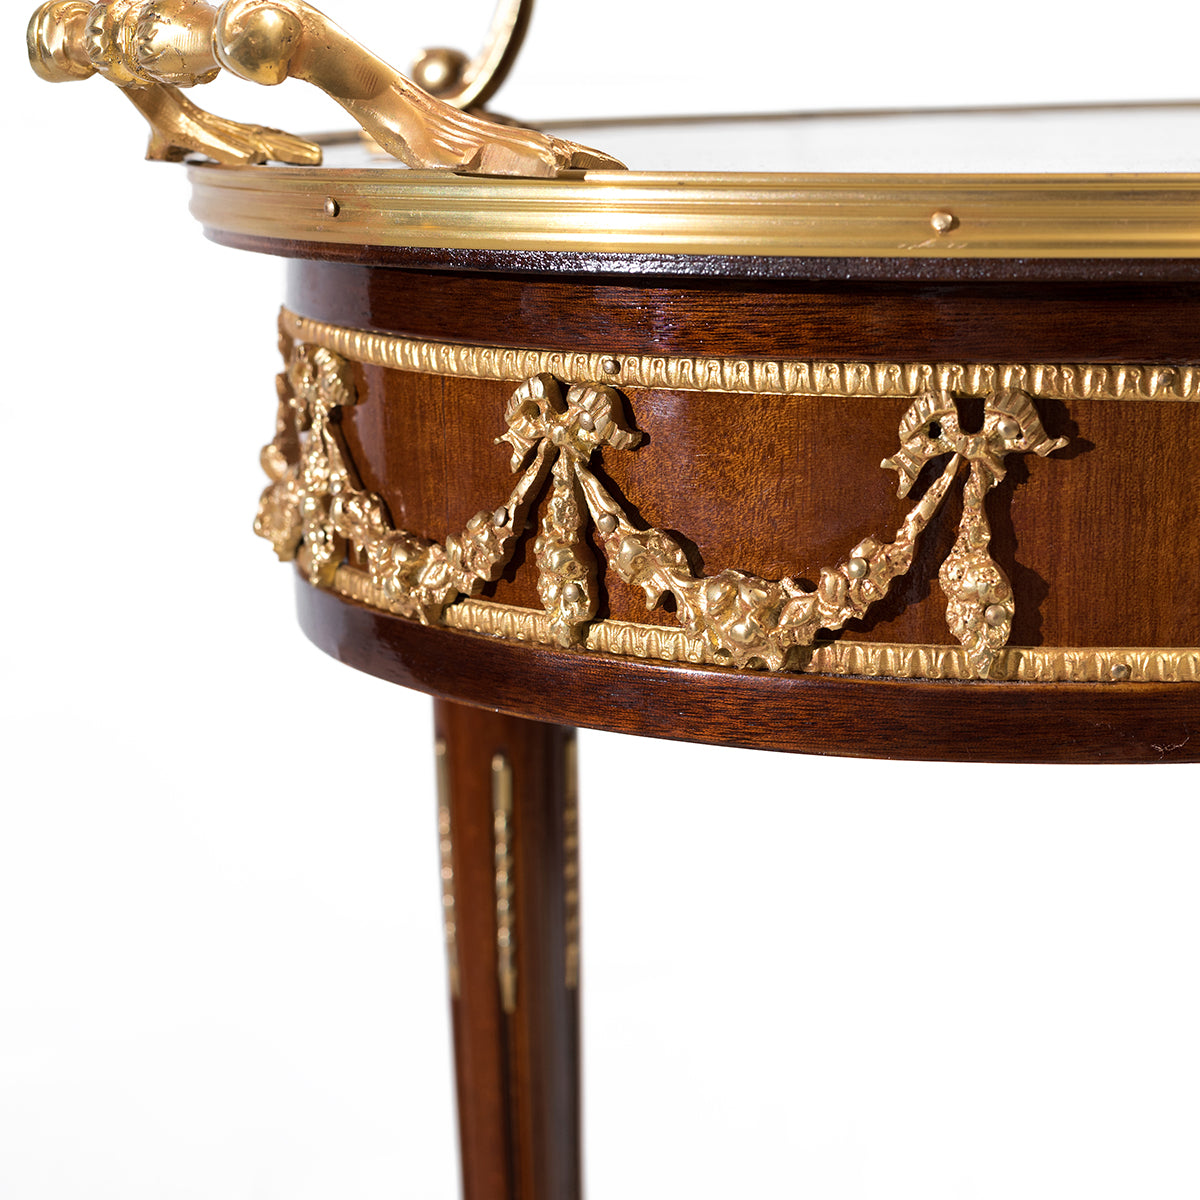 French Louis XV ormolu mounted tea cart